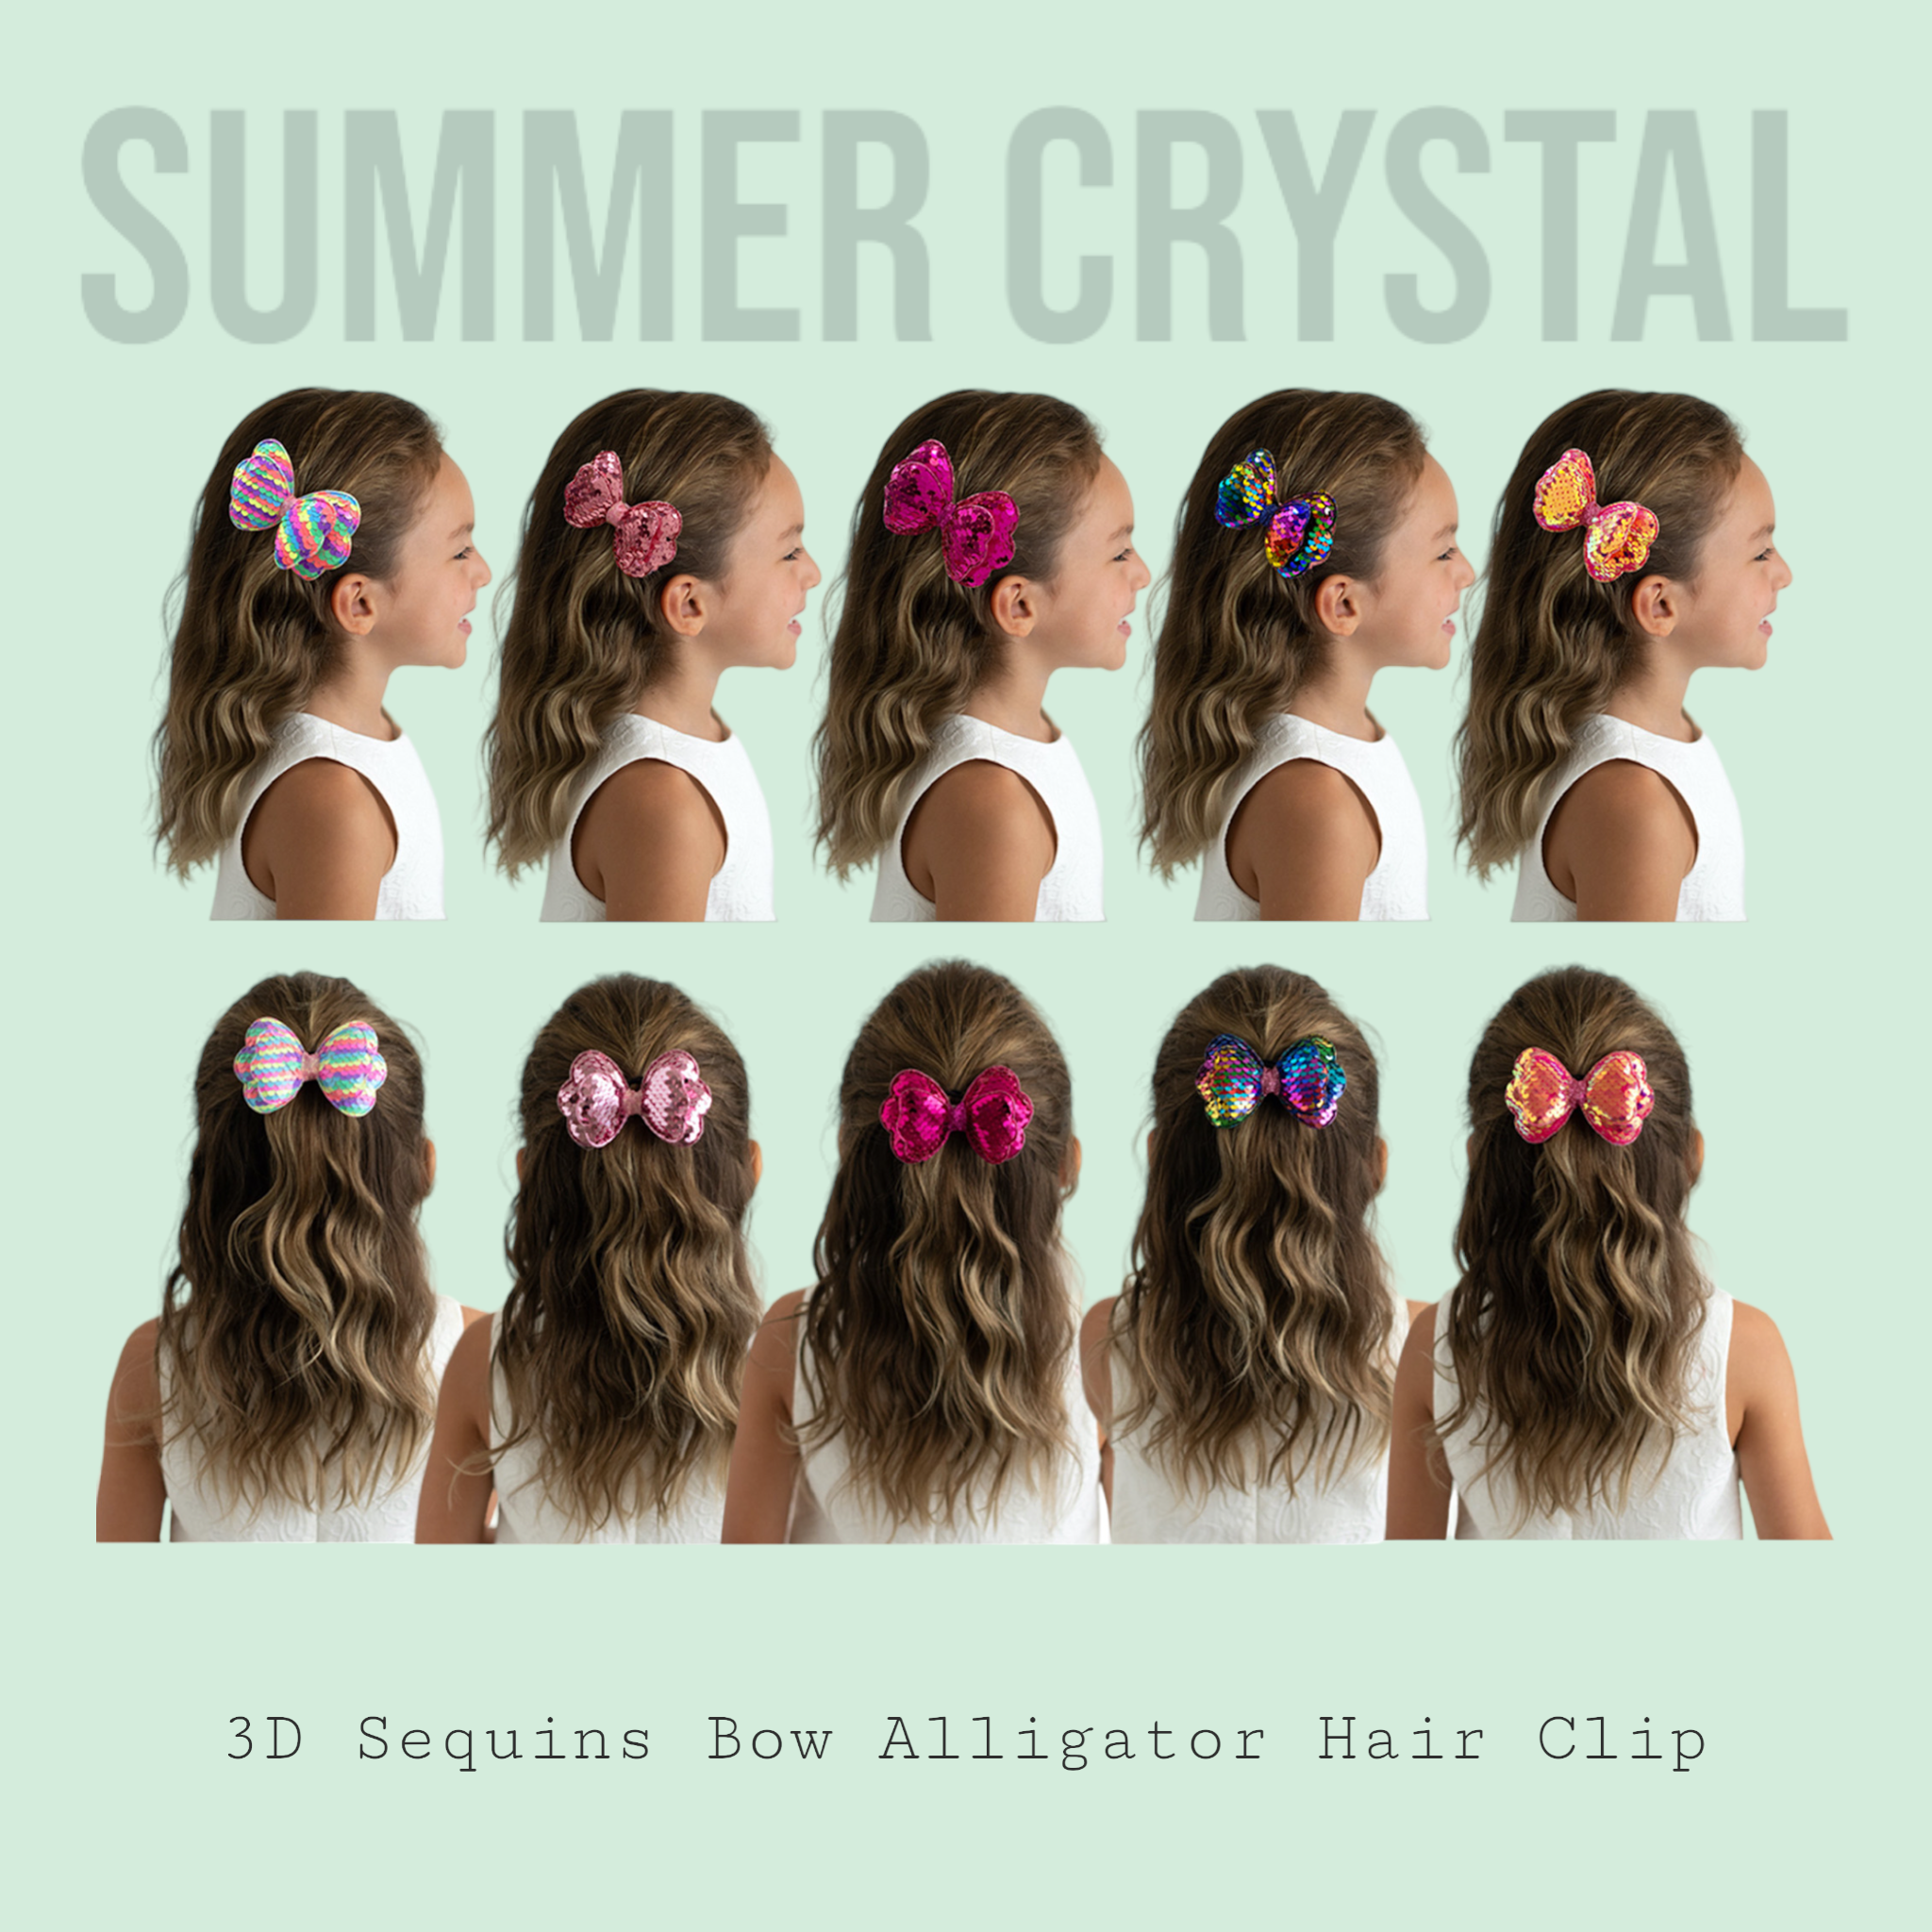 Summer Crystal 3D Sequins Bow Alligator Hair Clip 4x2.5 Inch